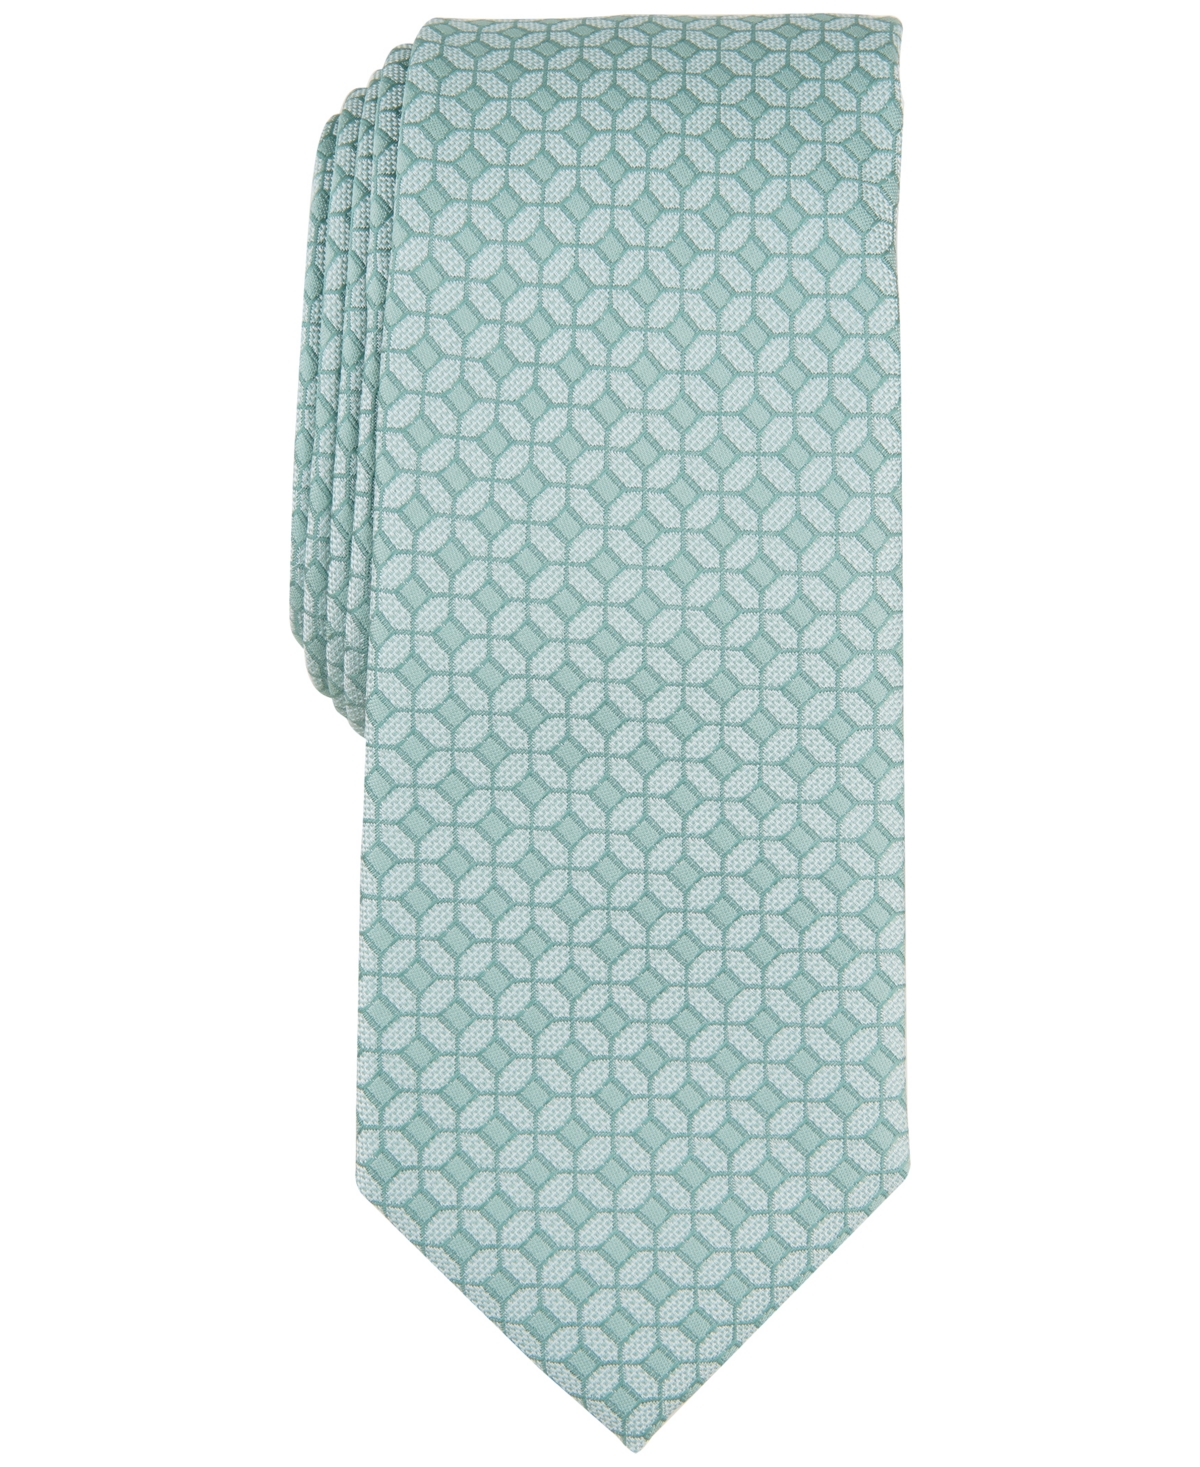 Men's Garner Geo-Pattern Tie, Created for Macy's - Mint